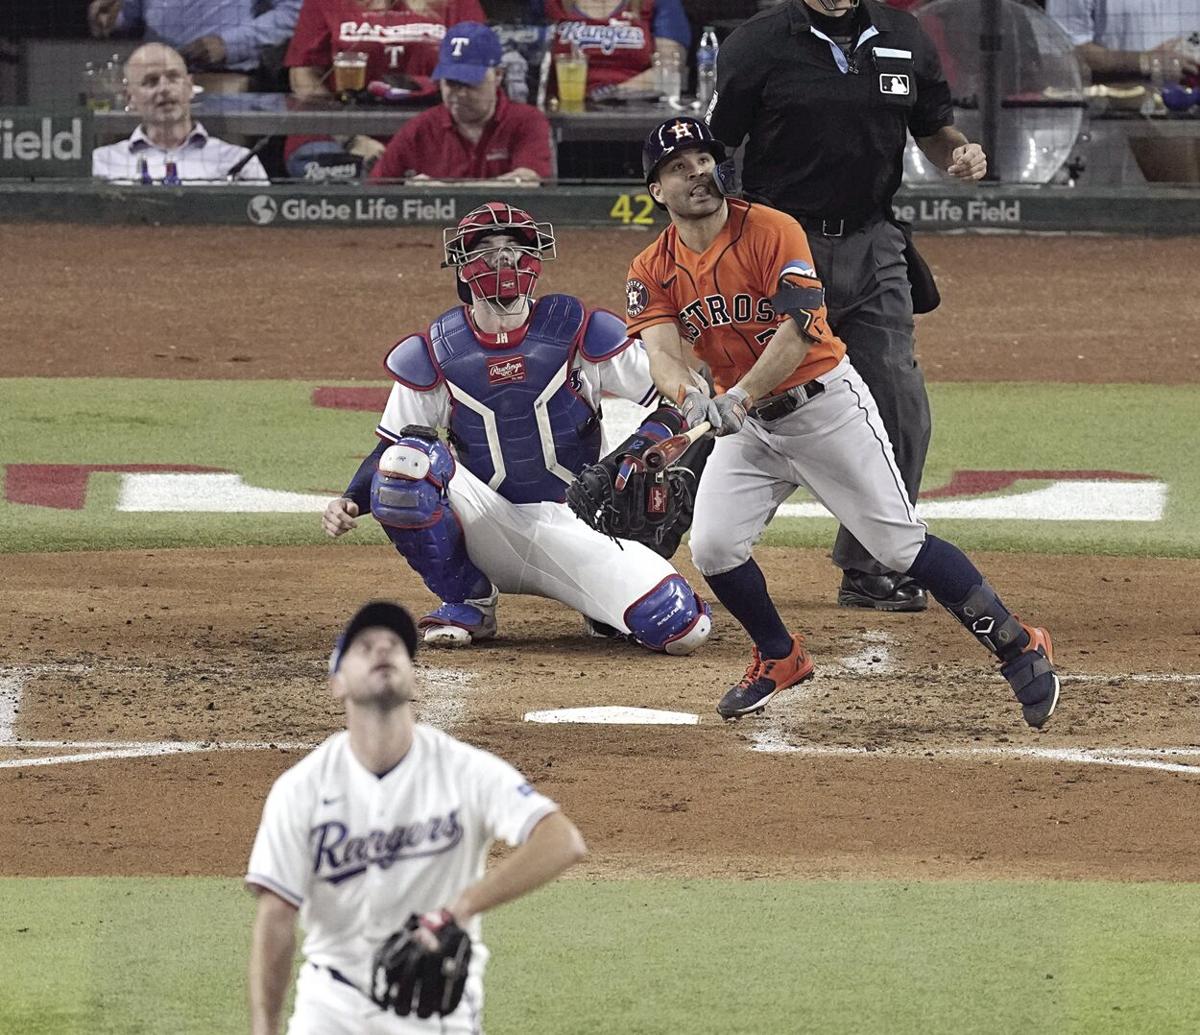 Houston Astros injury report: Jose Altuve resumes light hitting